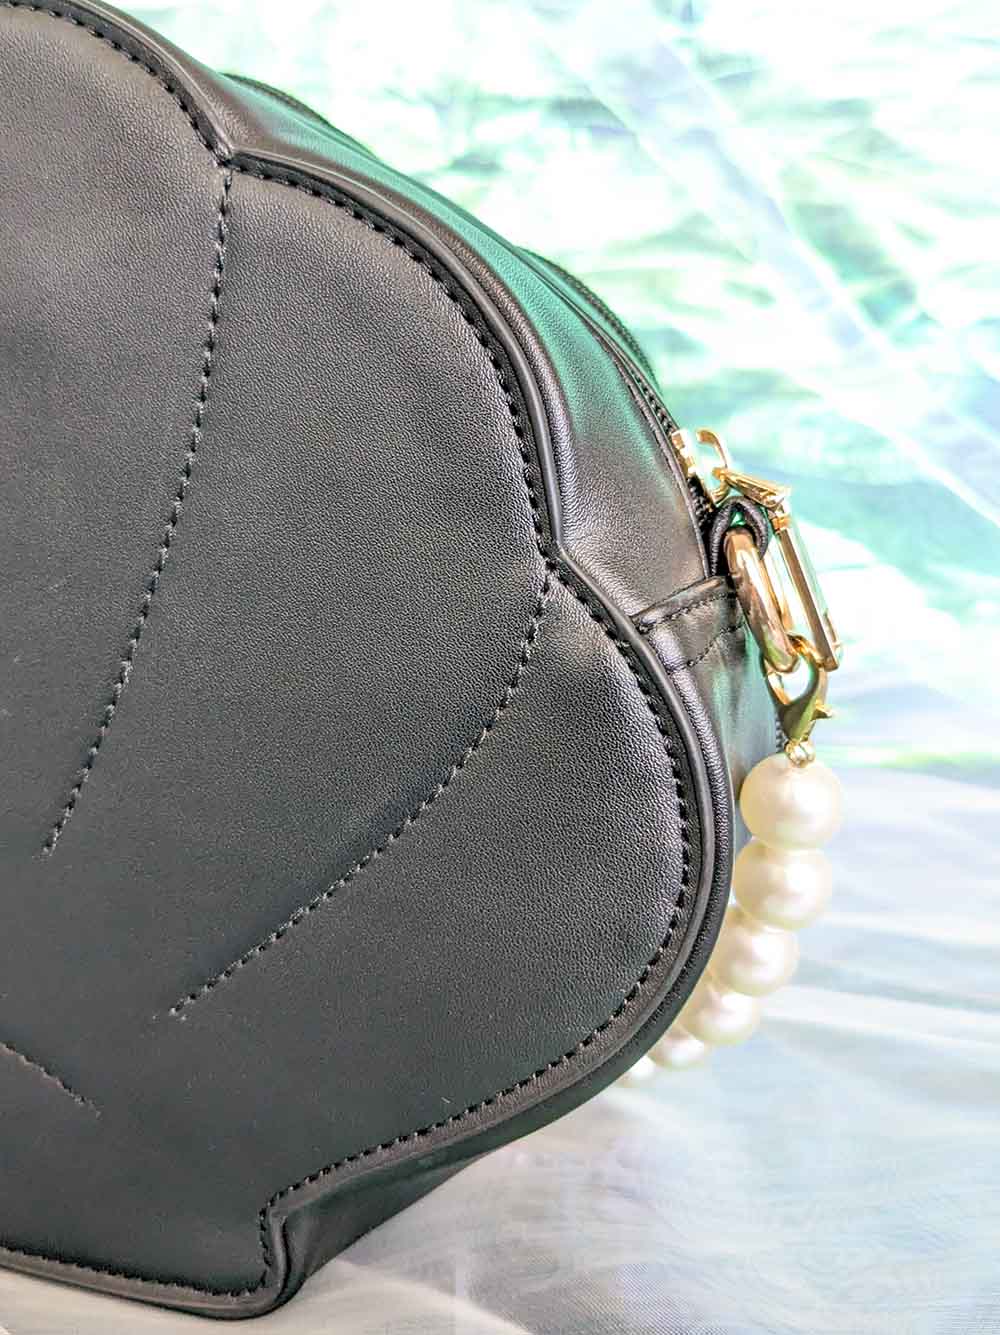 Ursula Little Mermaid Black Shell Ita Handbag Clutch Back